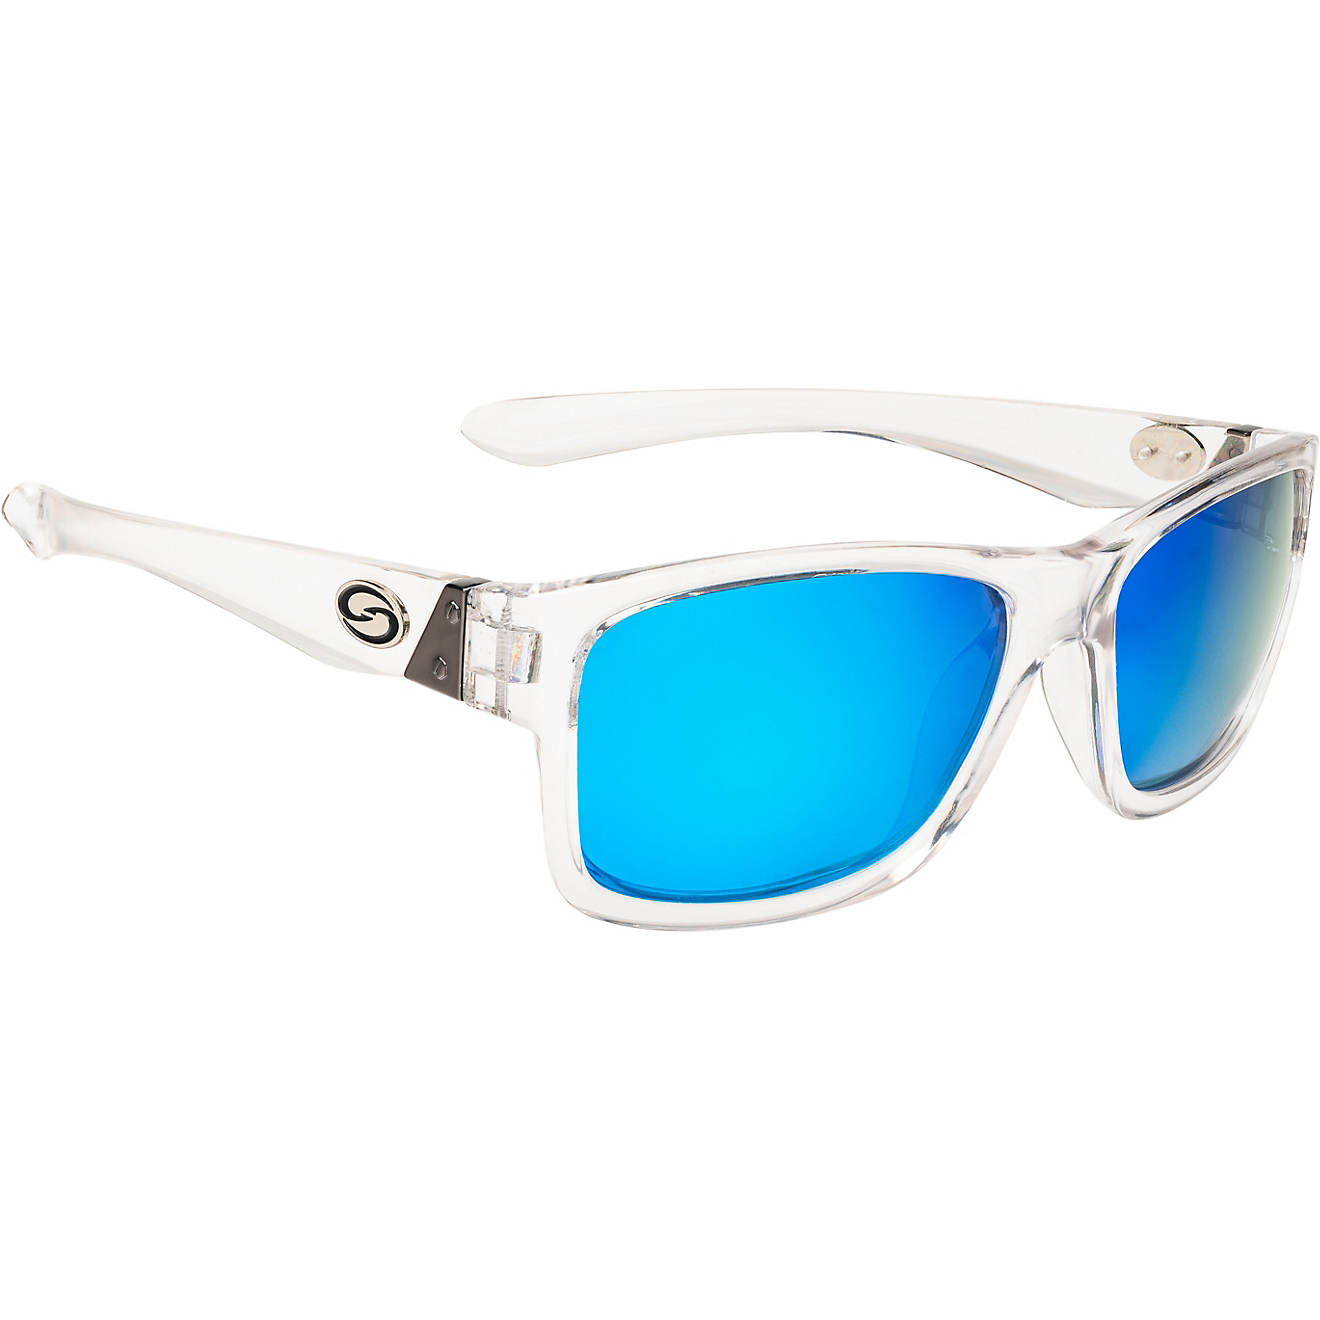 Strike King Sk Plus Series Polarized Sunglasses Fishing Sunglasses